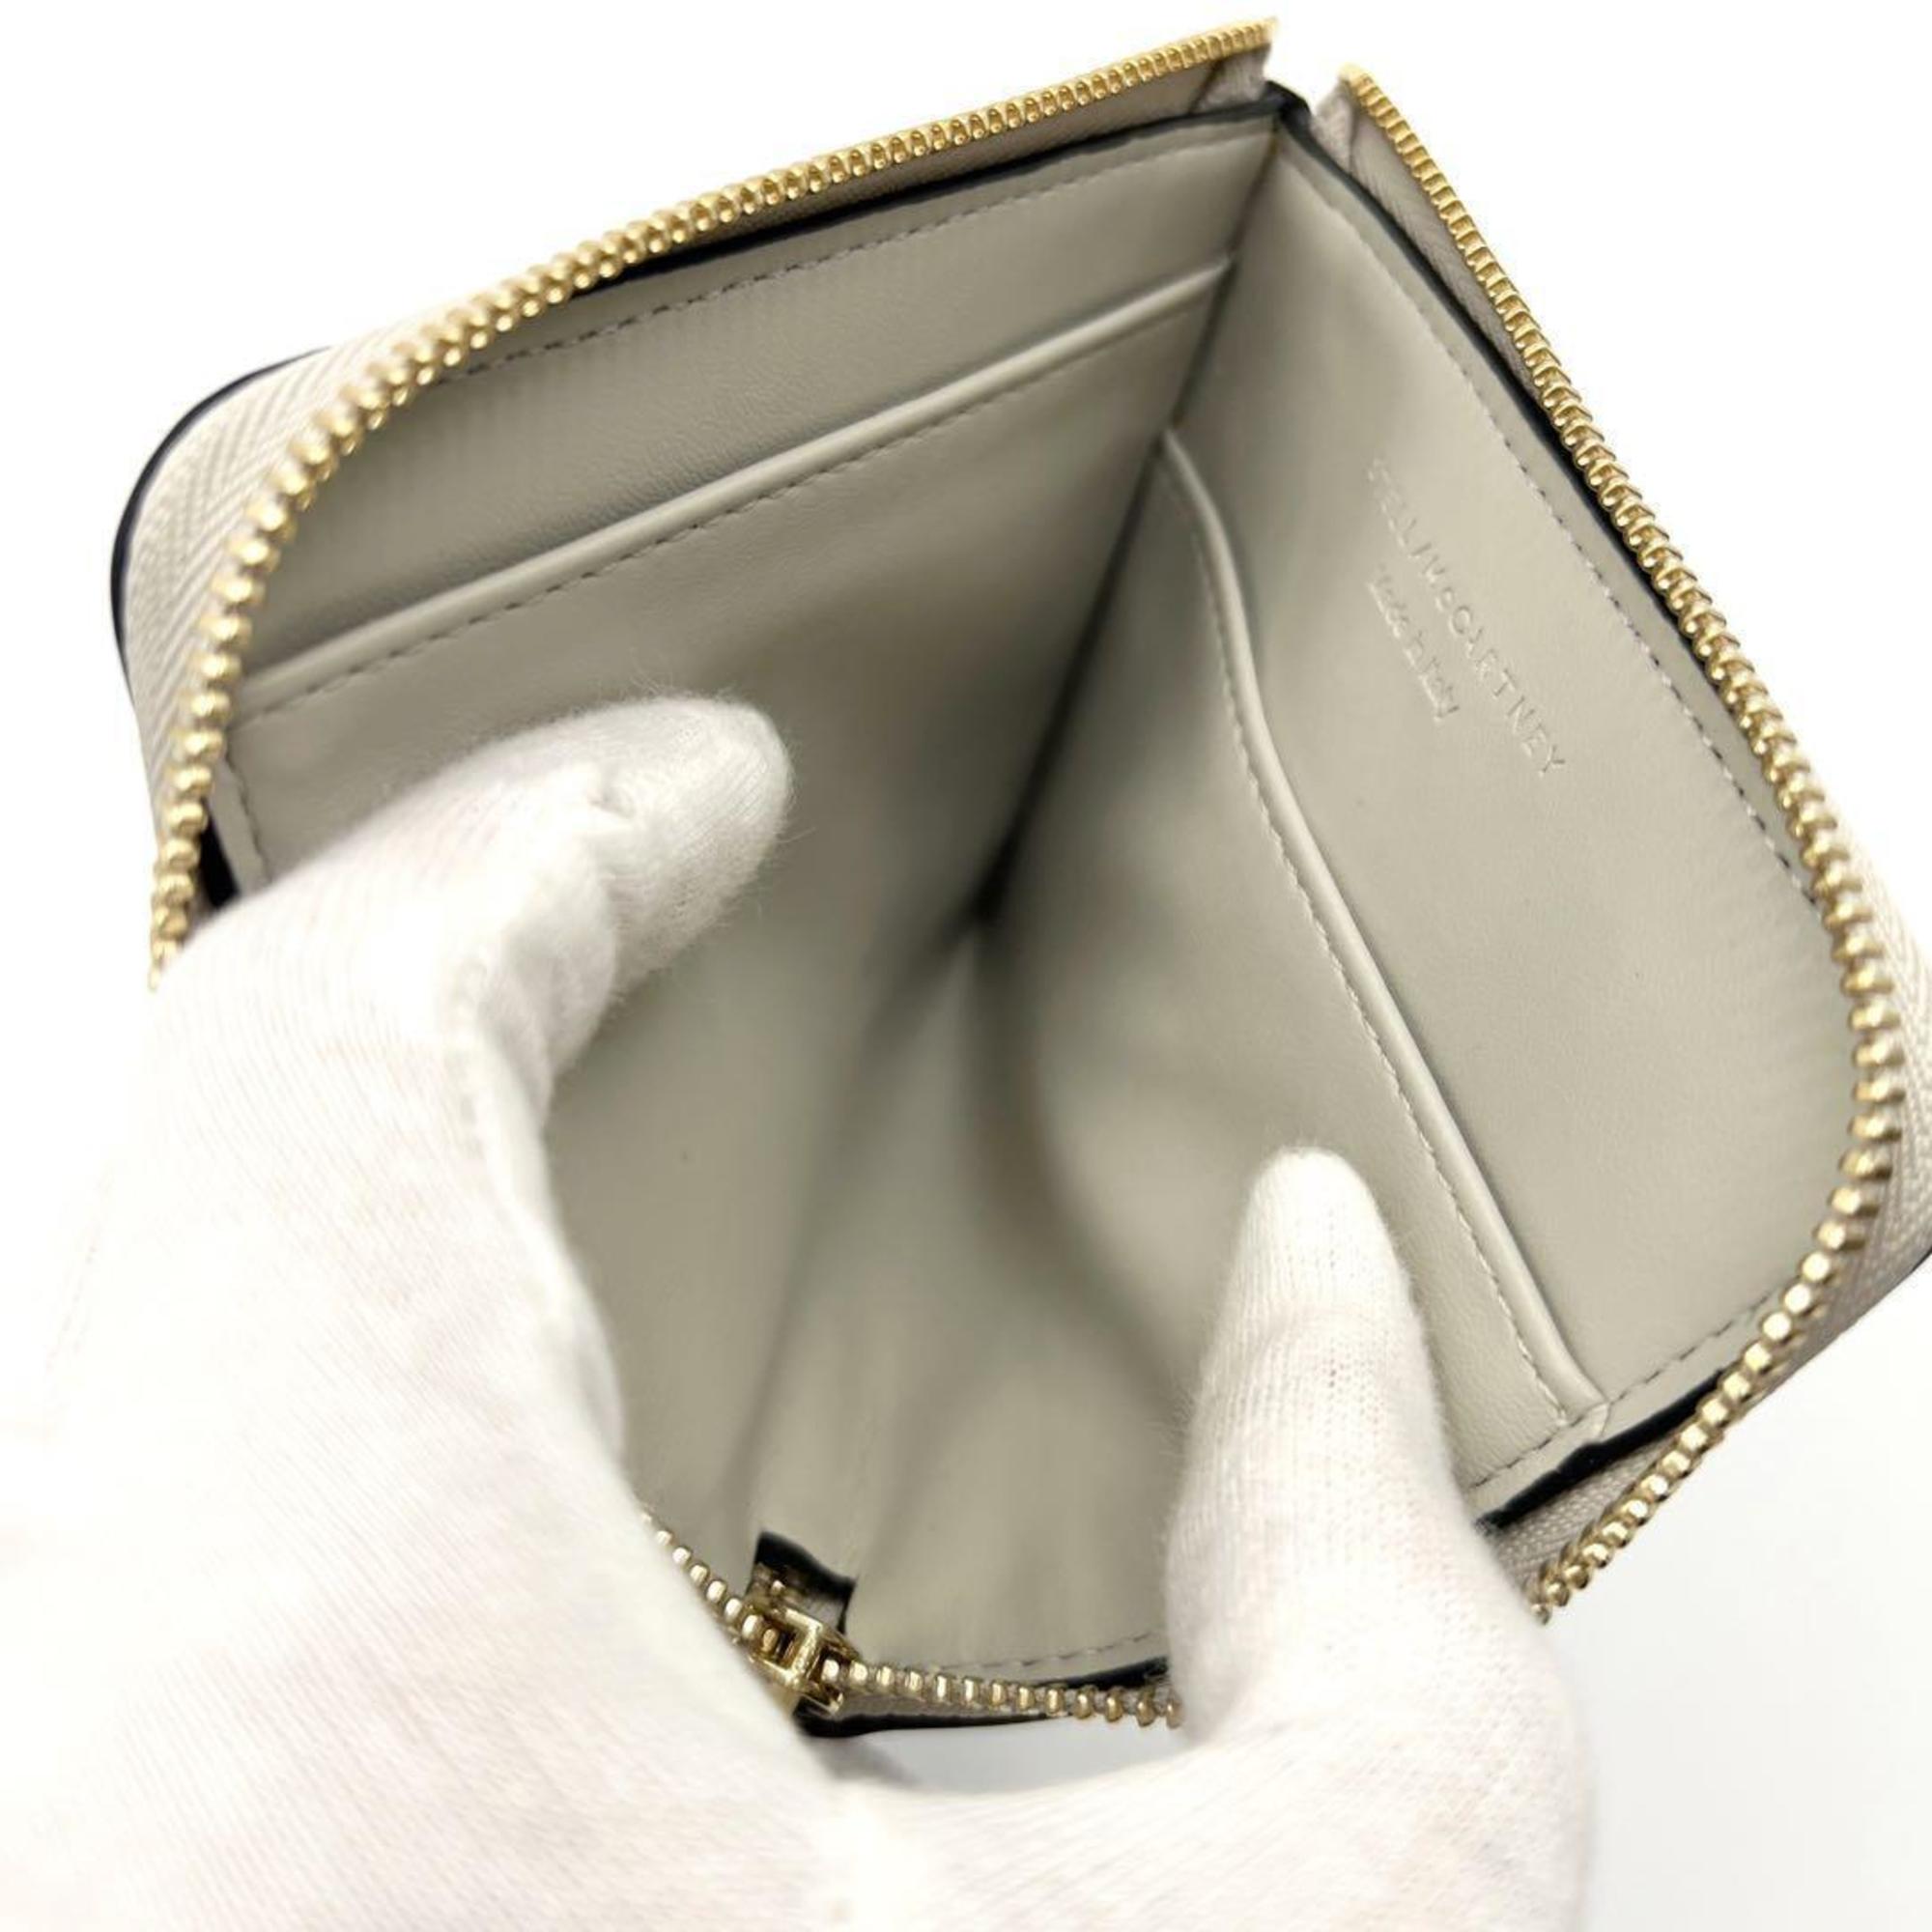 Stella McCartney wallet, card case, folding compact pass commuter case